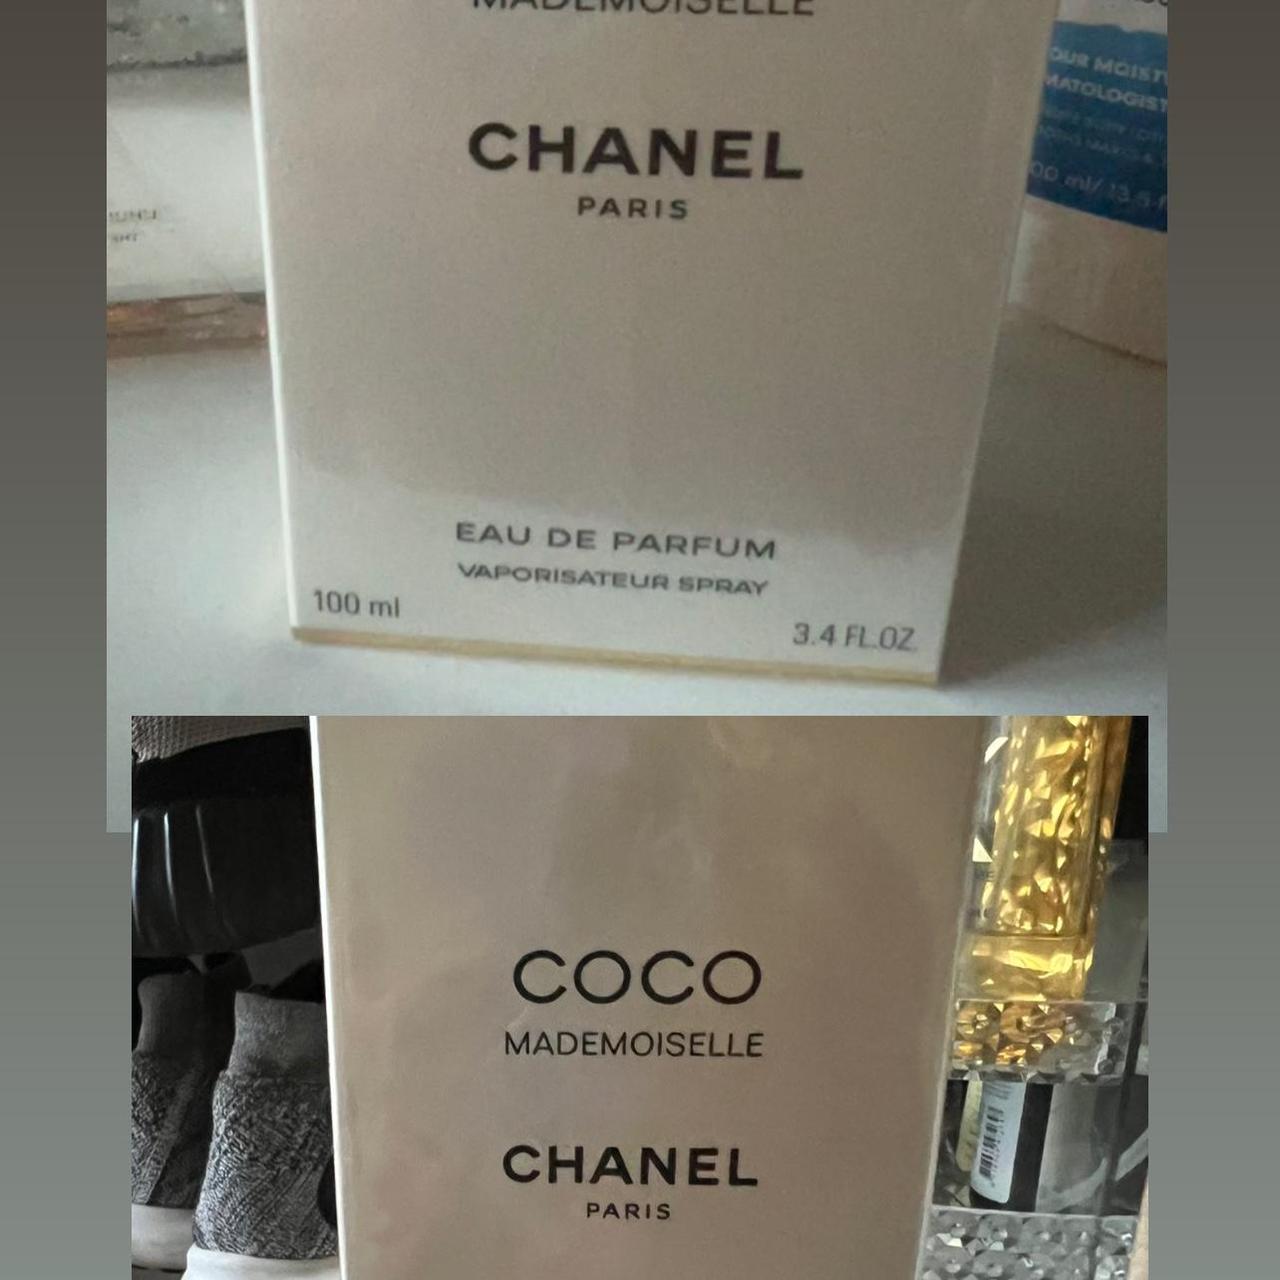 Chanel No.5 Eau De Parfum Spray Refill 60ml/2oz